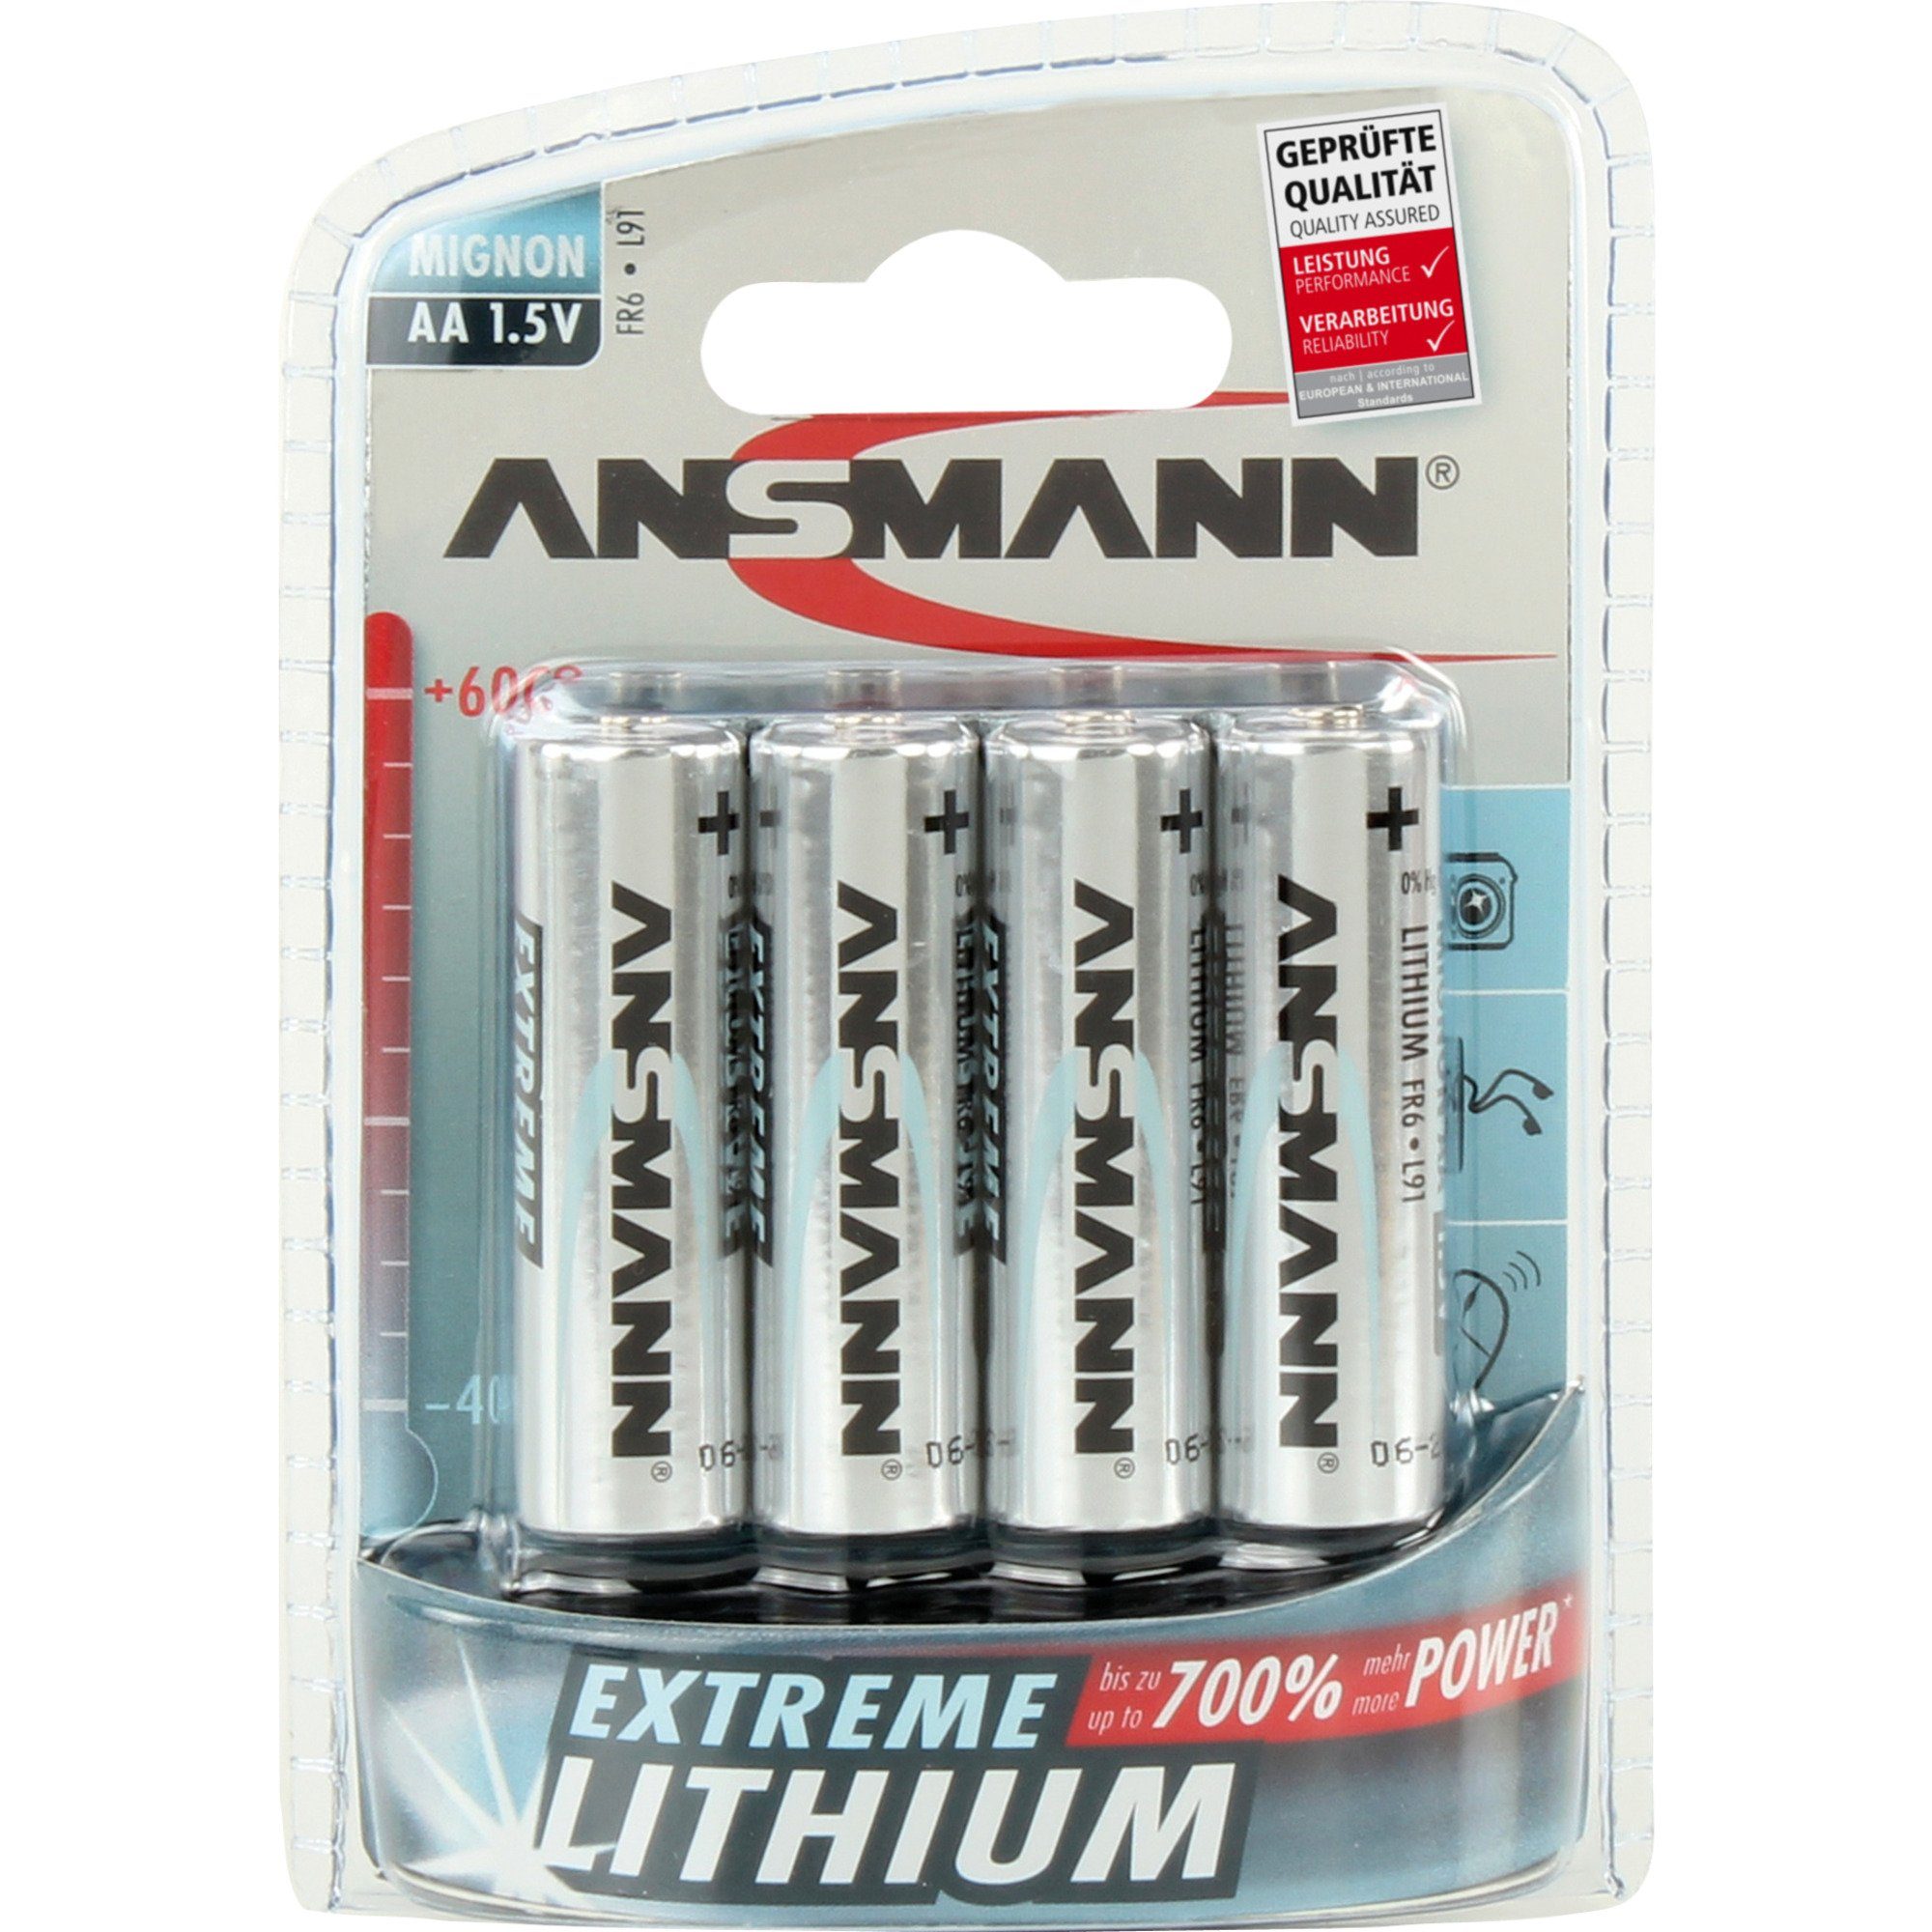 ANSMANN AG Extreme Lithium Mignon AA Batterie